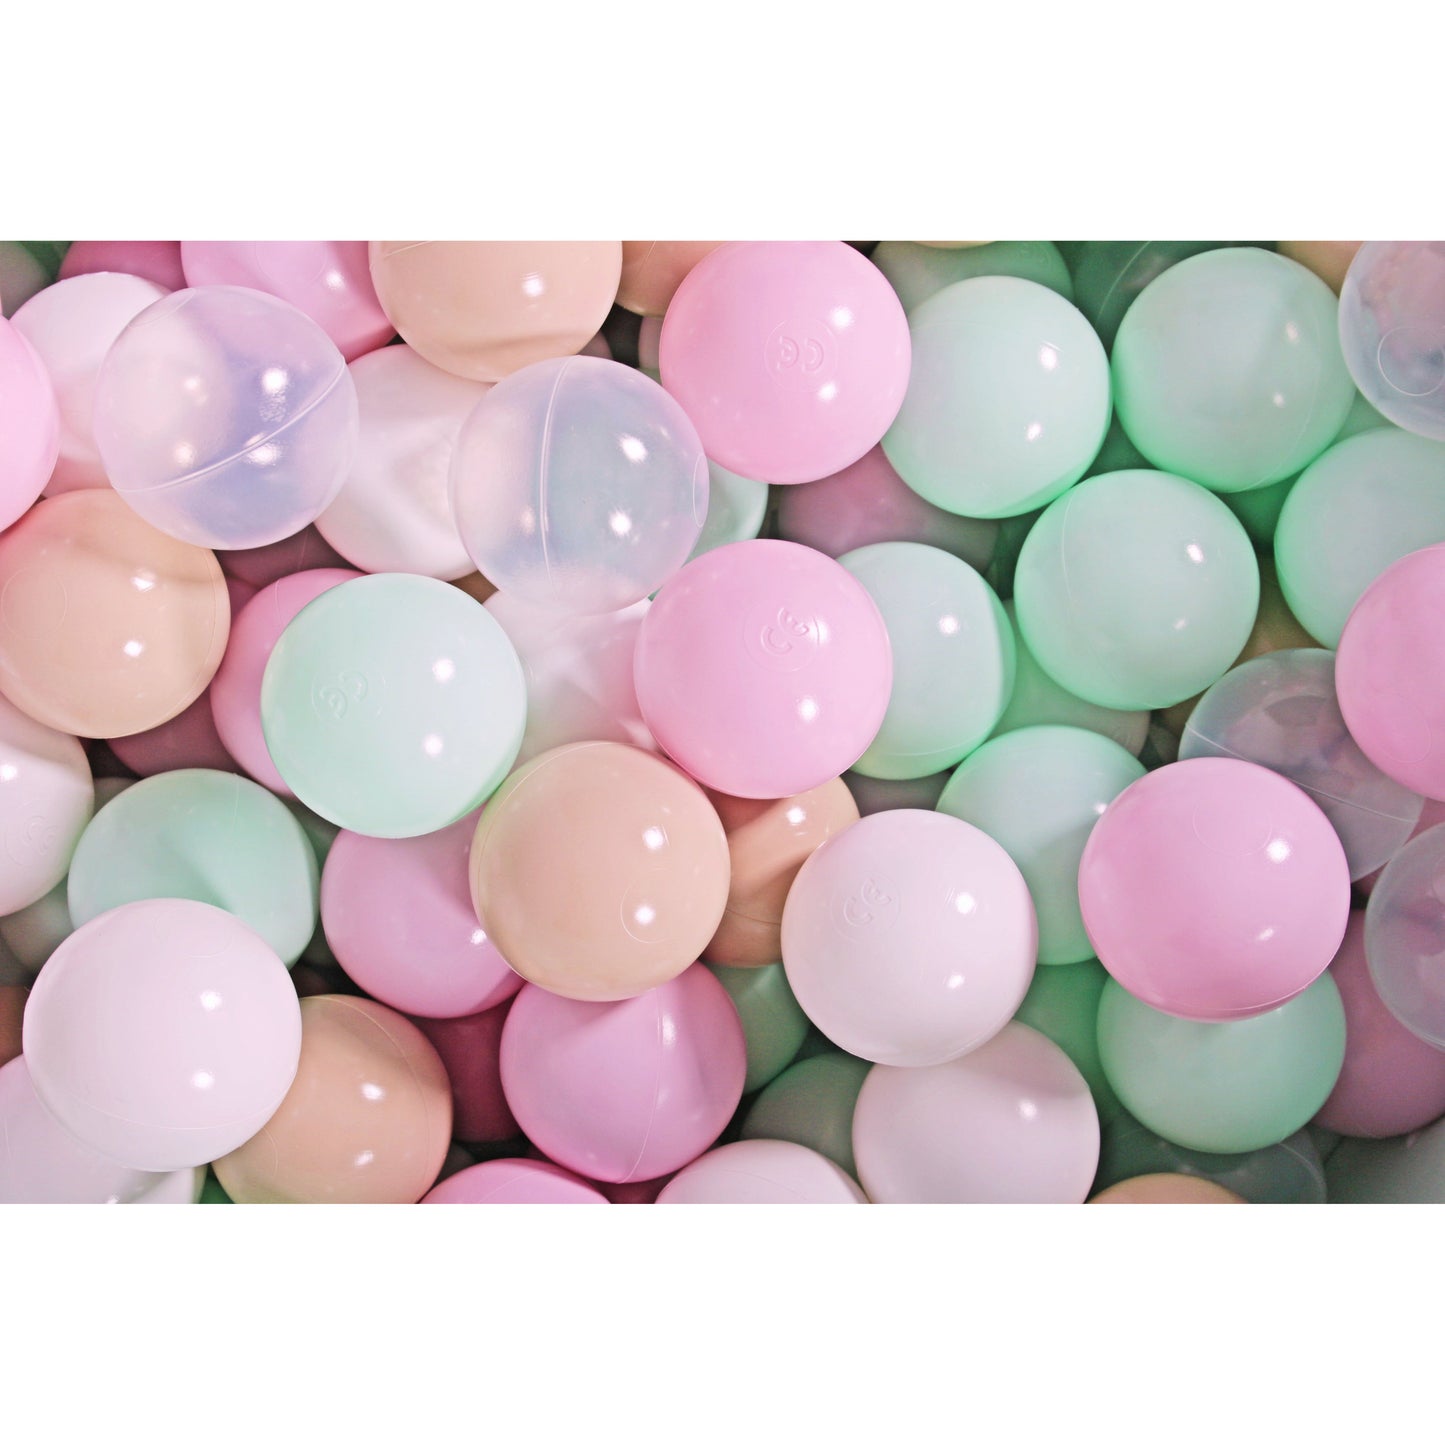 Velvet Corduroy Apricot Round Foam Ball Pit - Select Your Own Balls